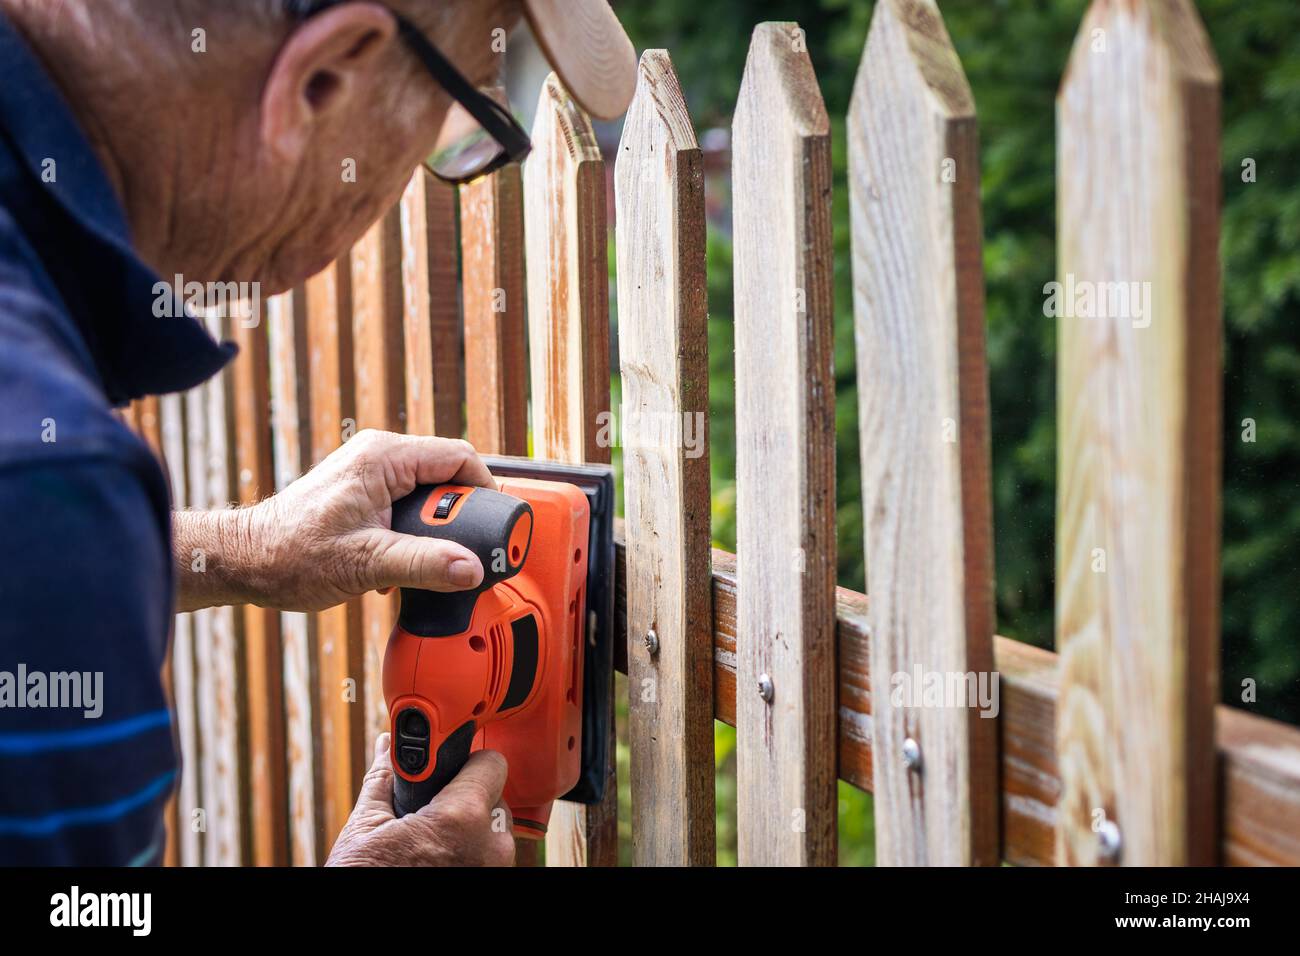 Sanding wooden plank. Senior man grinding picket fence with sander Stock Photo